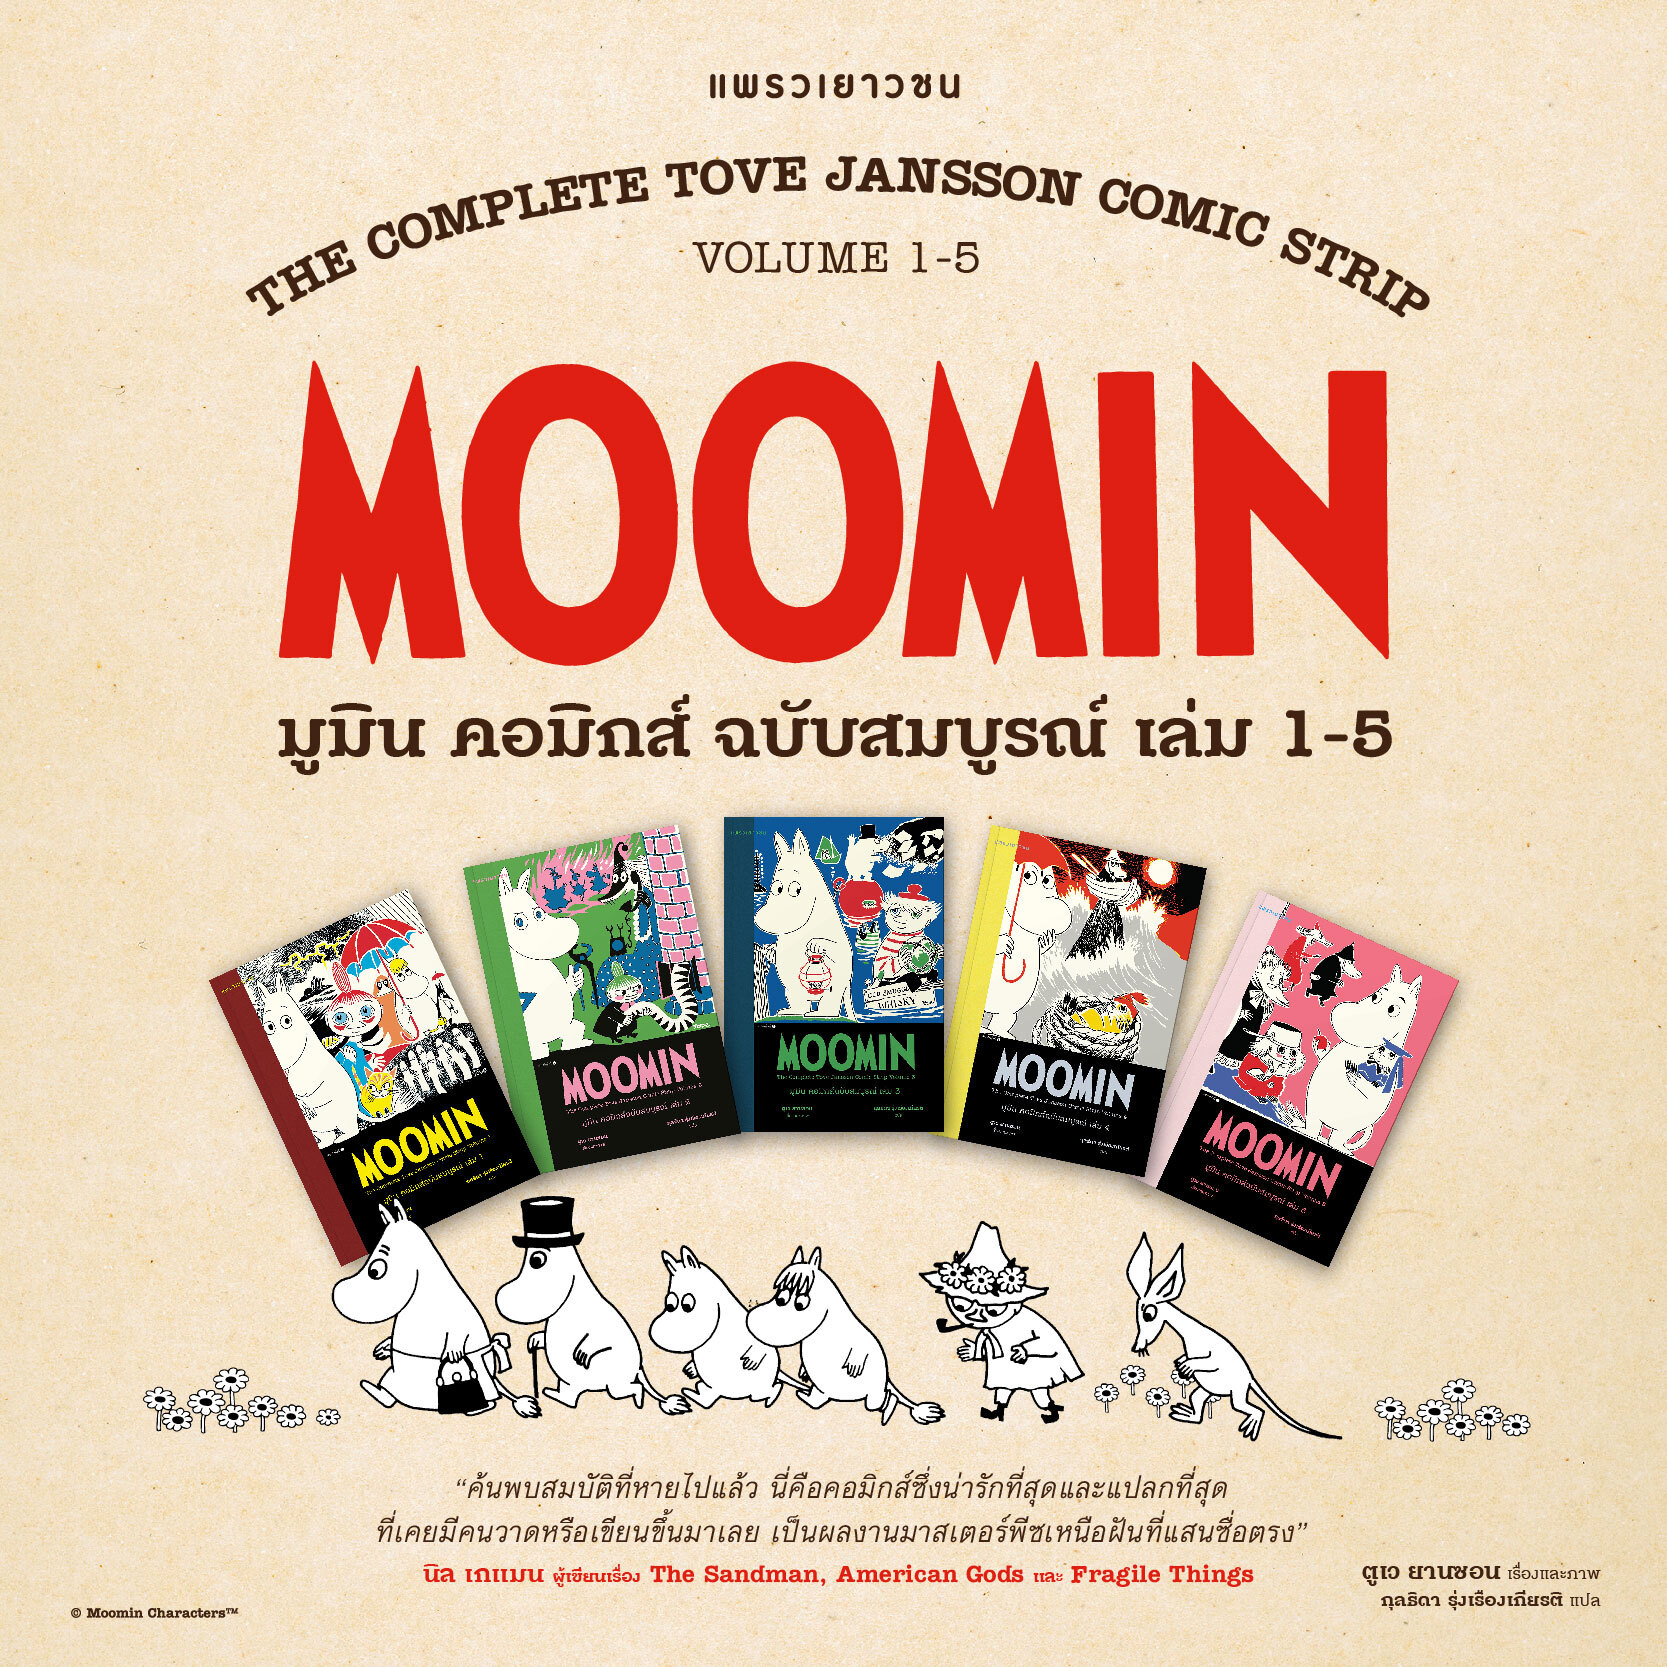 SET 5 เล่ม มูมิน คอมิกส์ฉบับสมบูรณ์ เล่ม 1-5 Moomin (The Complete Tove Jansson Comic Strips) / ตูเว ยานซอน เรื่องและภาพ / แพรวเยาวชน